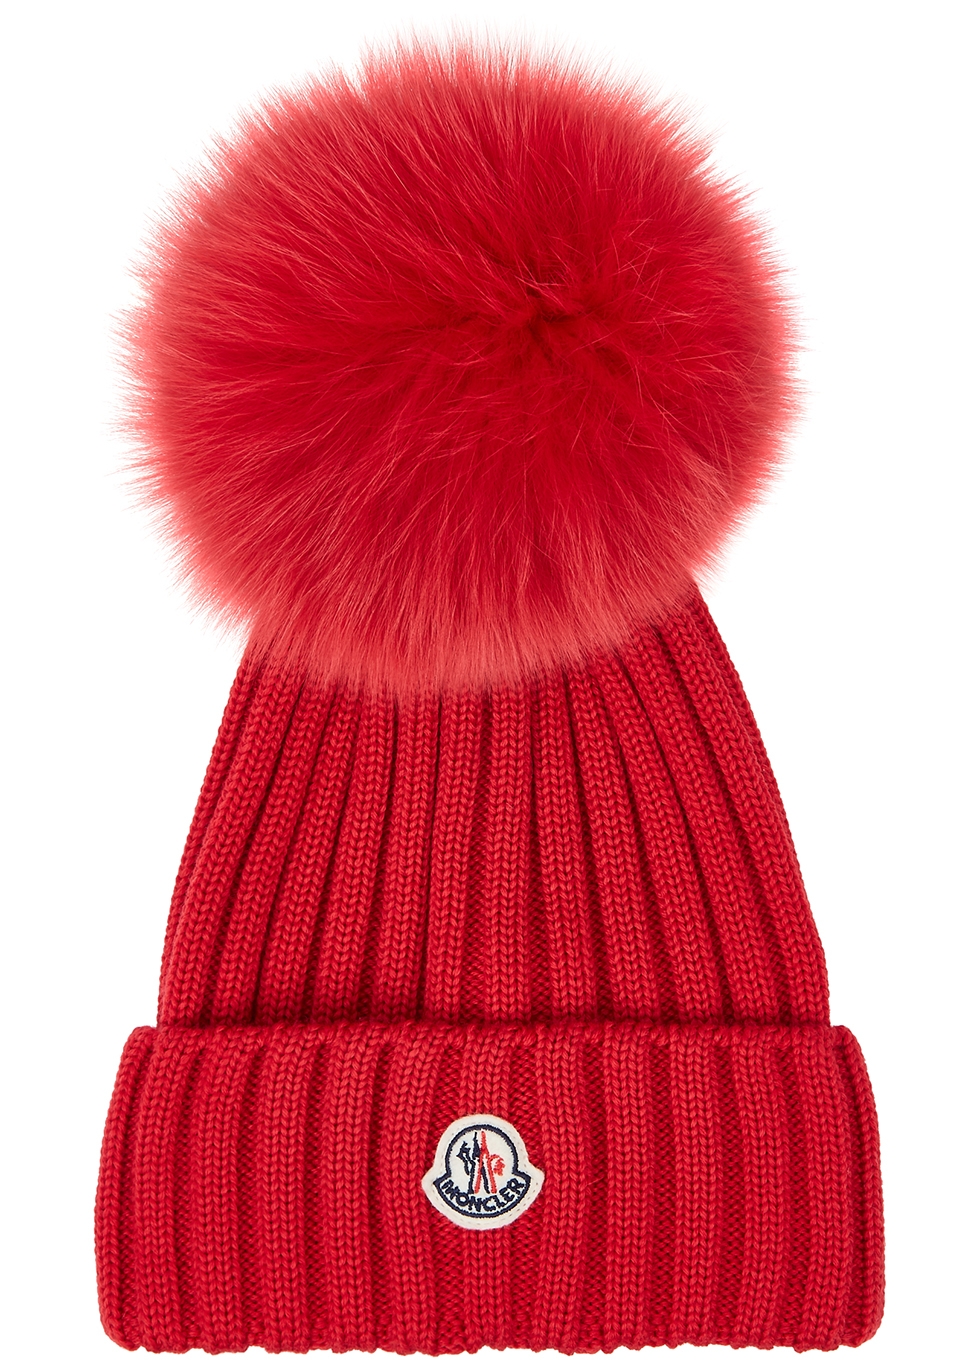 red moncler hat